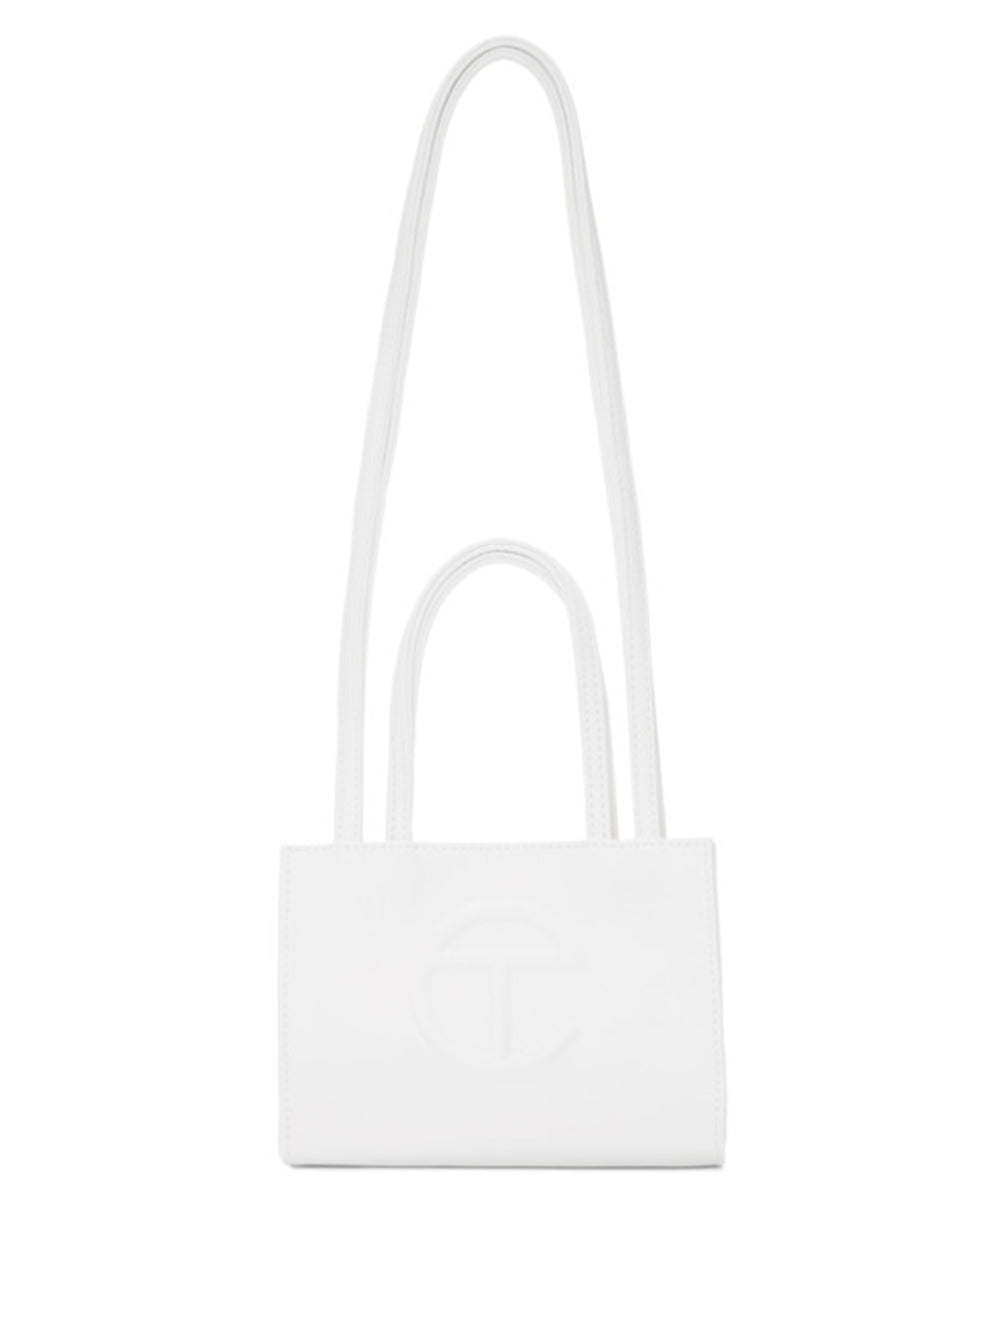 Telfar NEW Small 'White' Telfar Shopping Bag